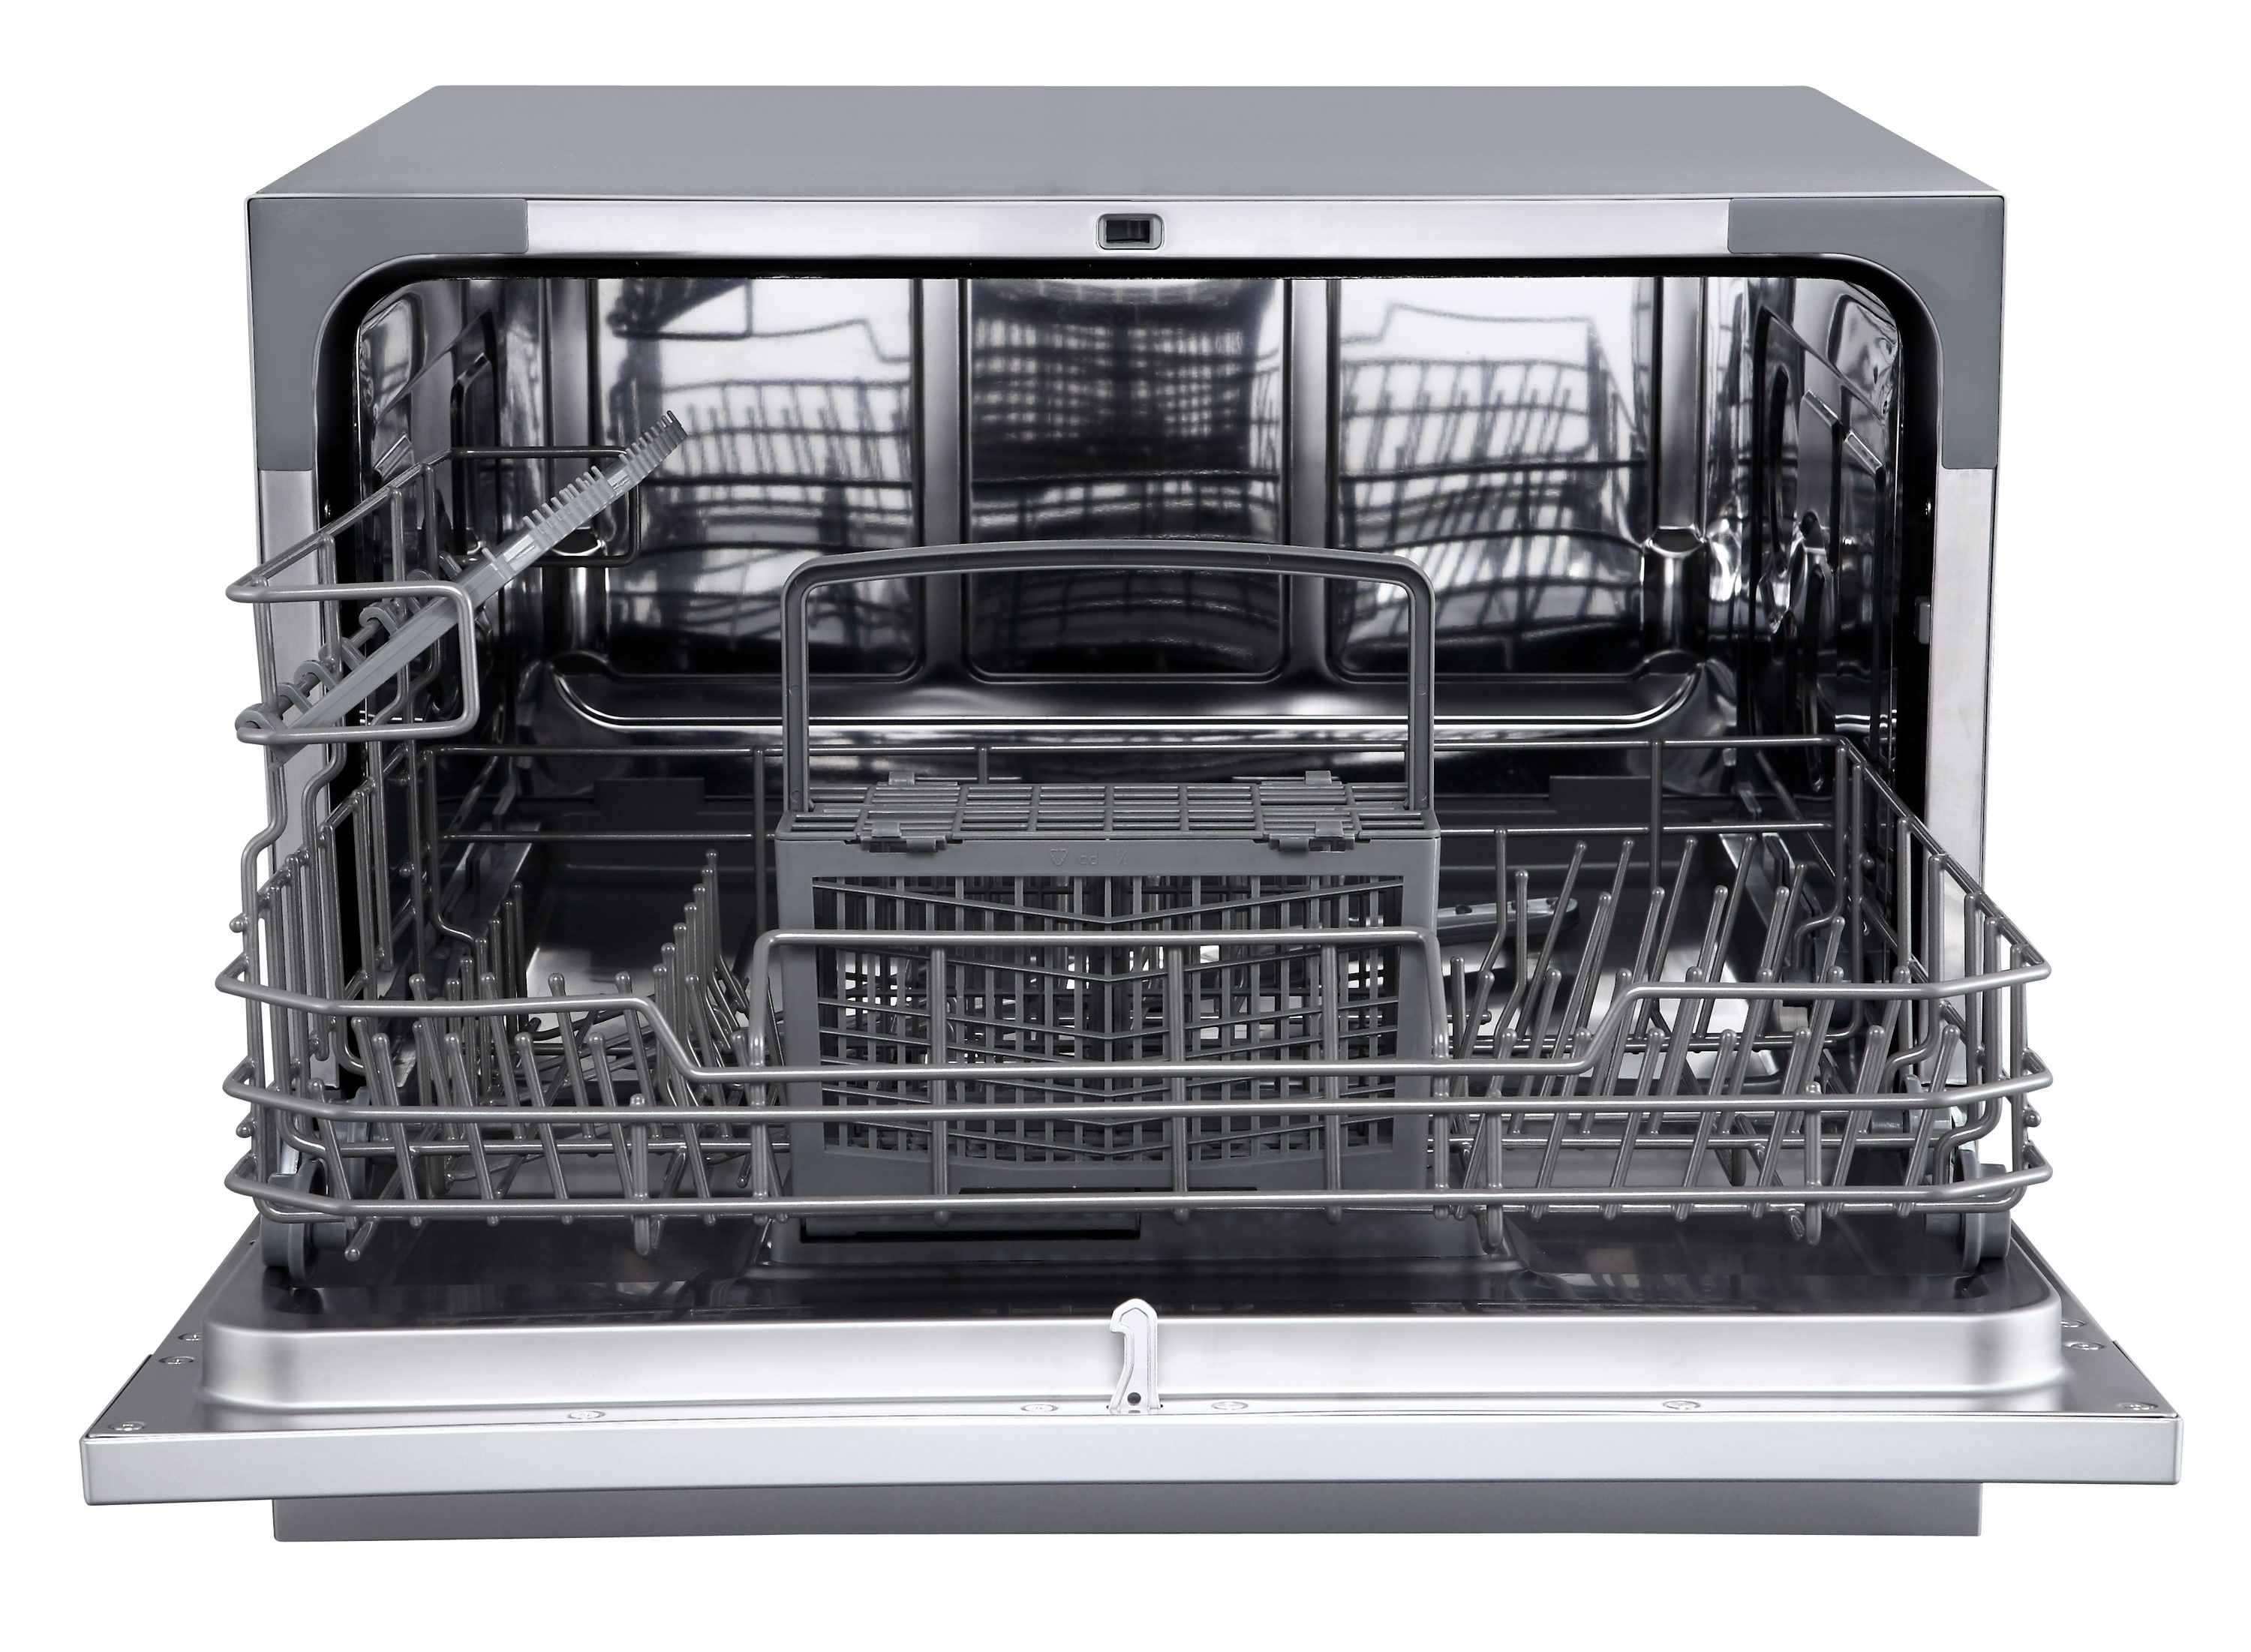 Grey Dishwashers For Sale, Countertop Dishwasher Manufacturer